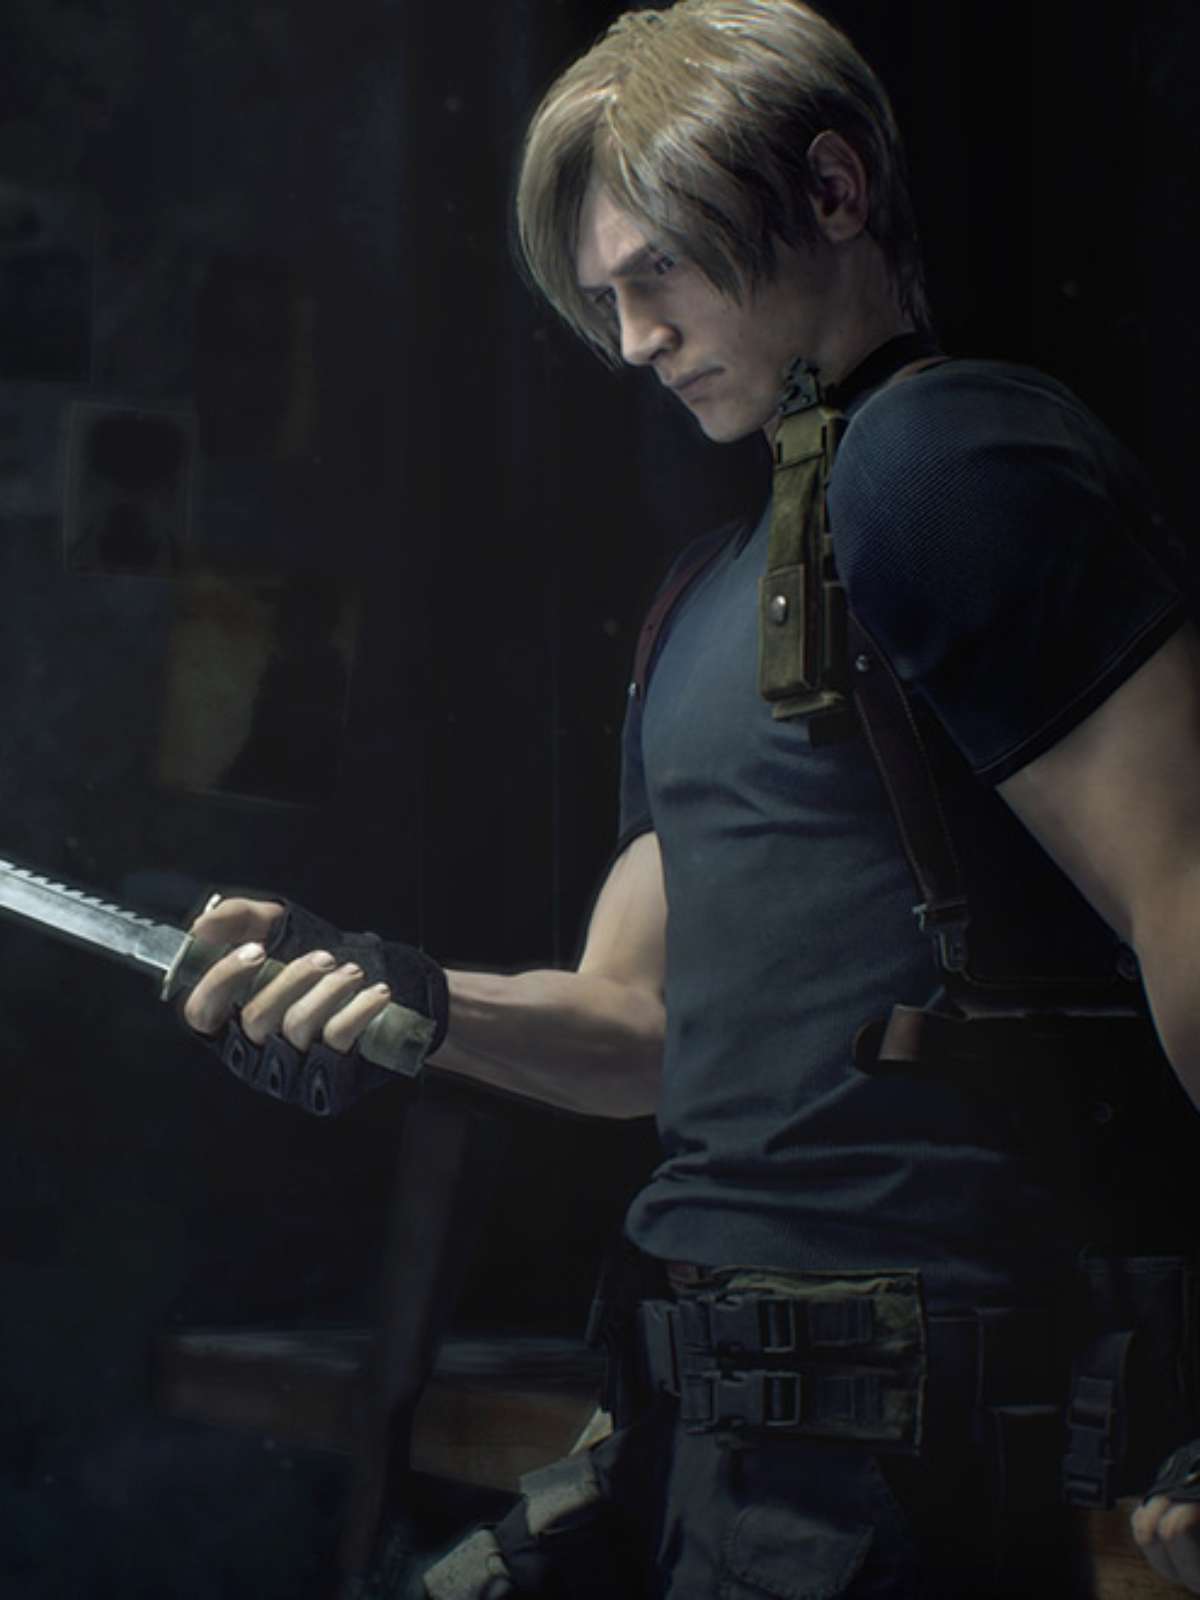 Resident Evil 4 Remake  Ada Wong in Mercernary Catsuit PC Mod